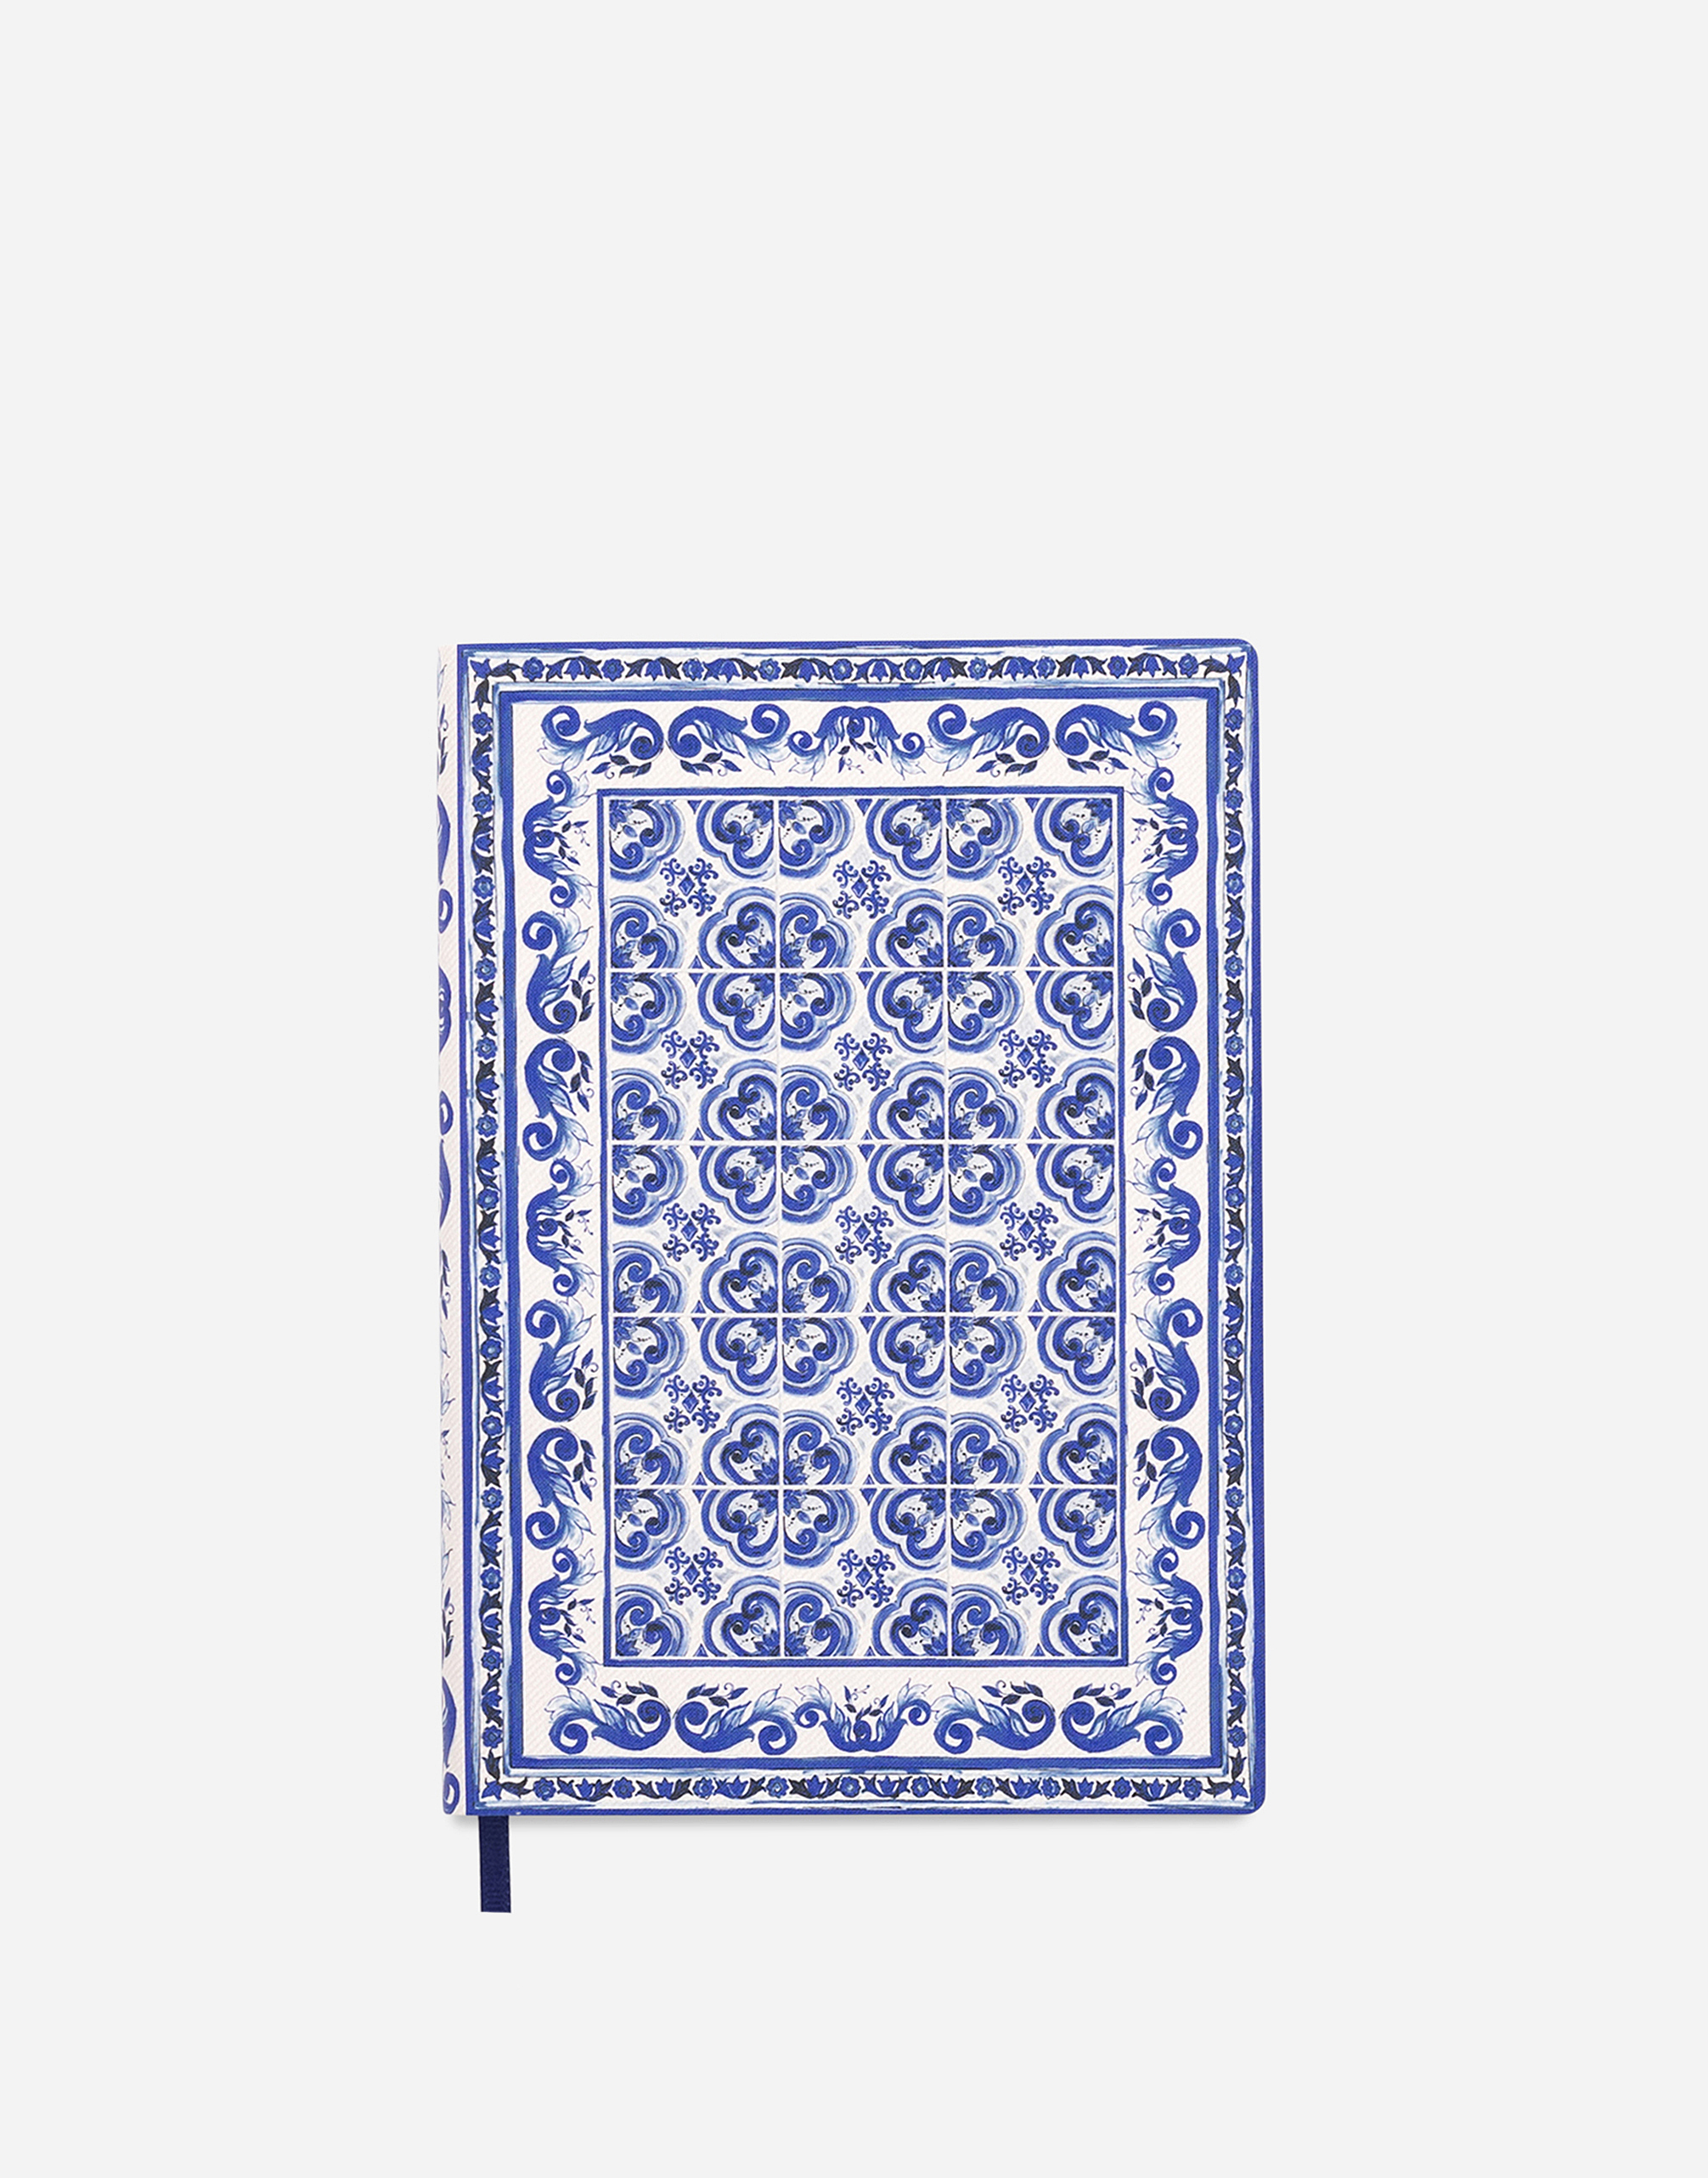 Medium Blank Notebook Textile Cover in Multicolor